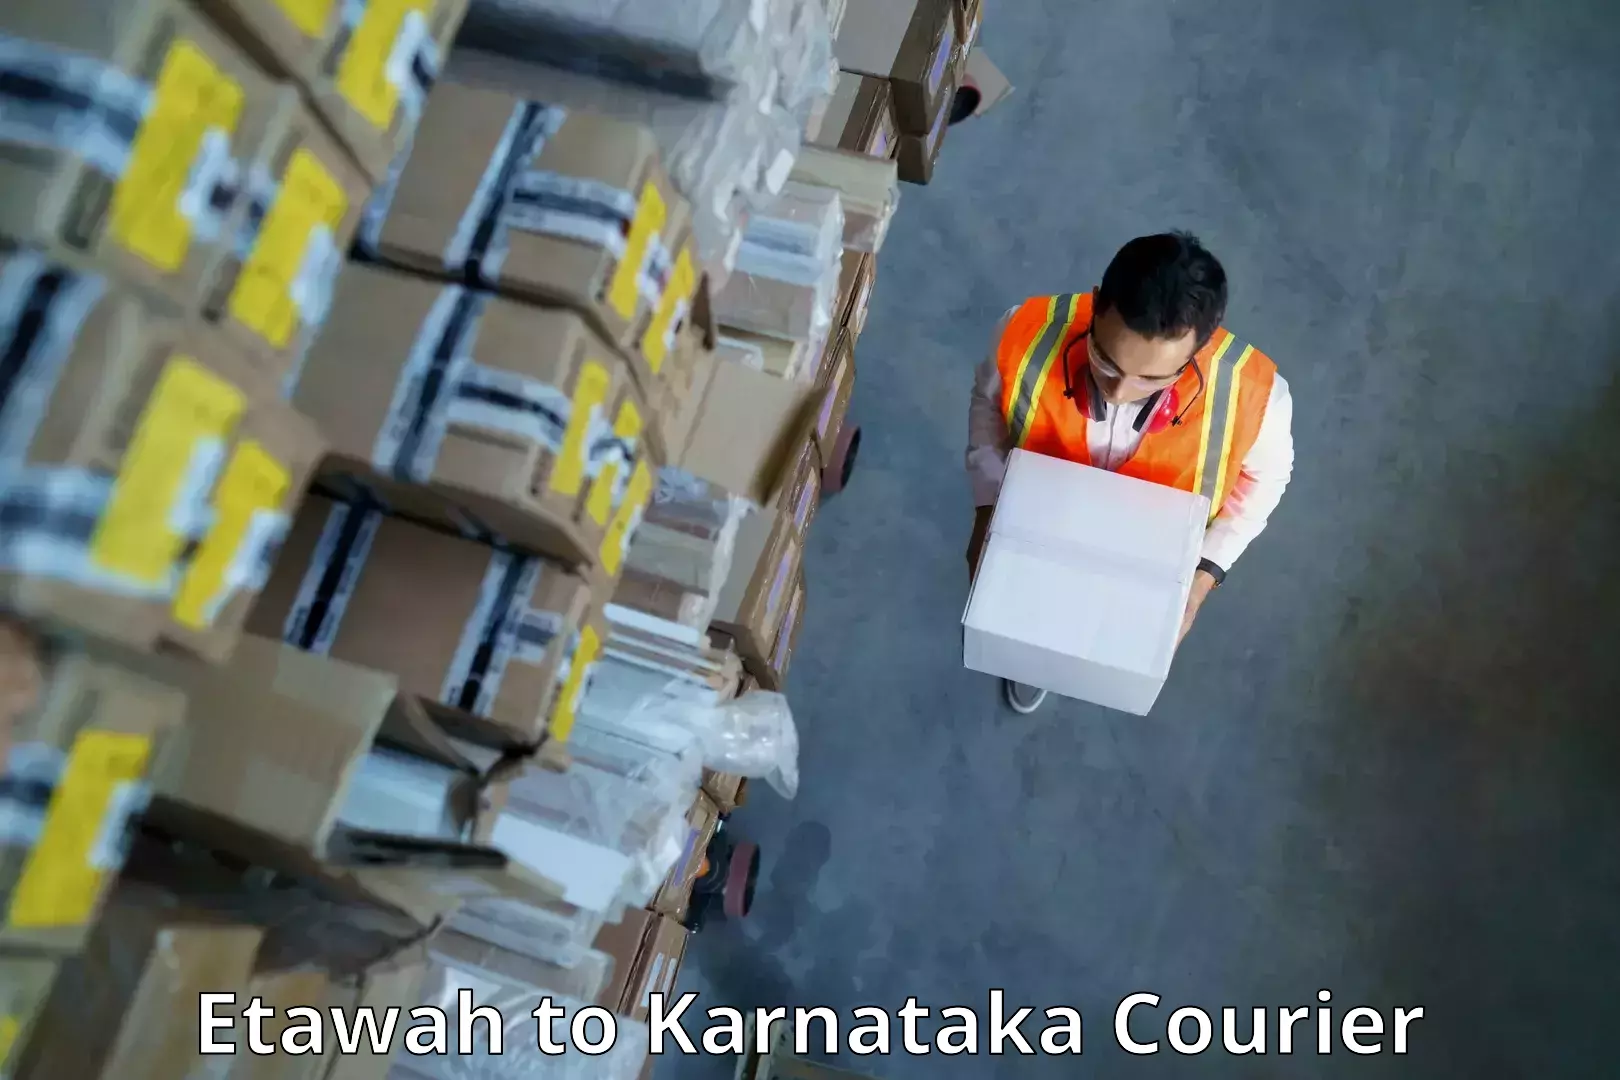 Multi-city courier Etawah to Mysore